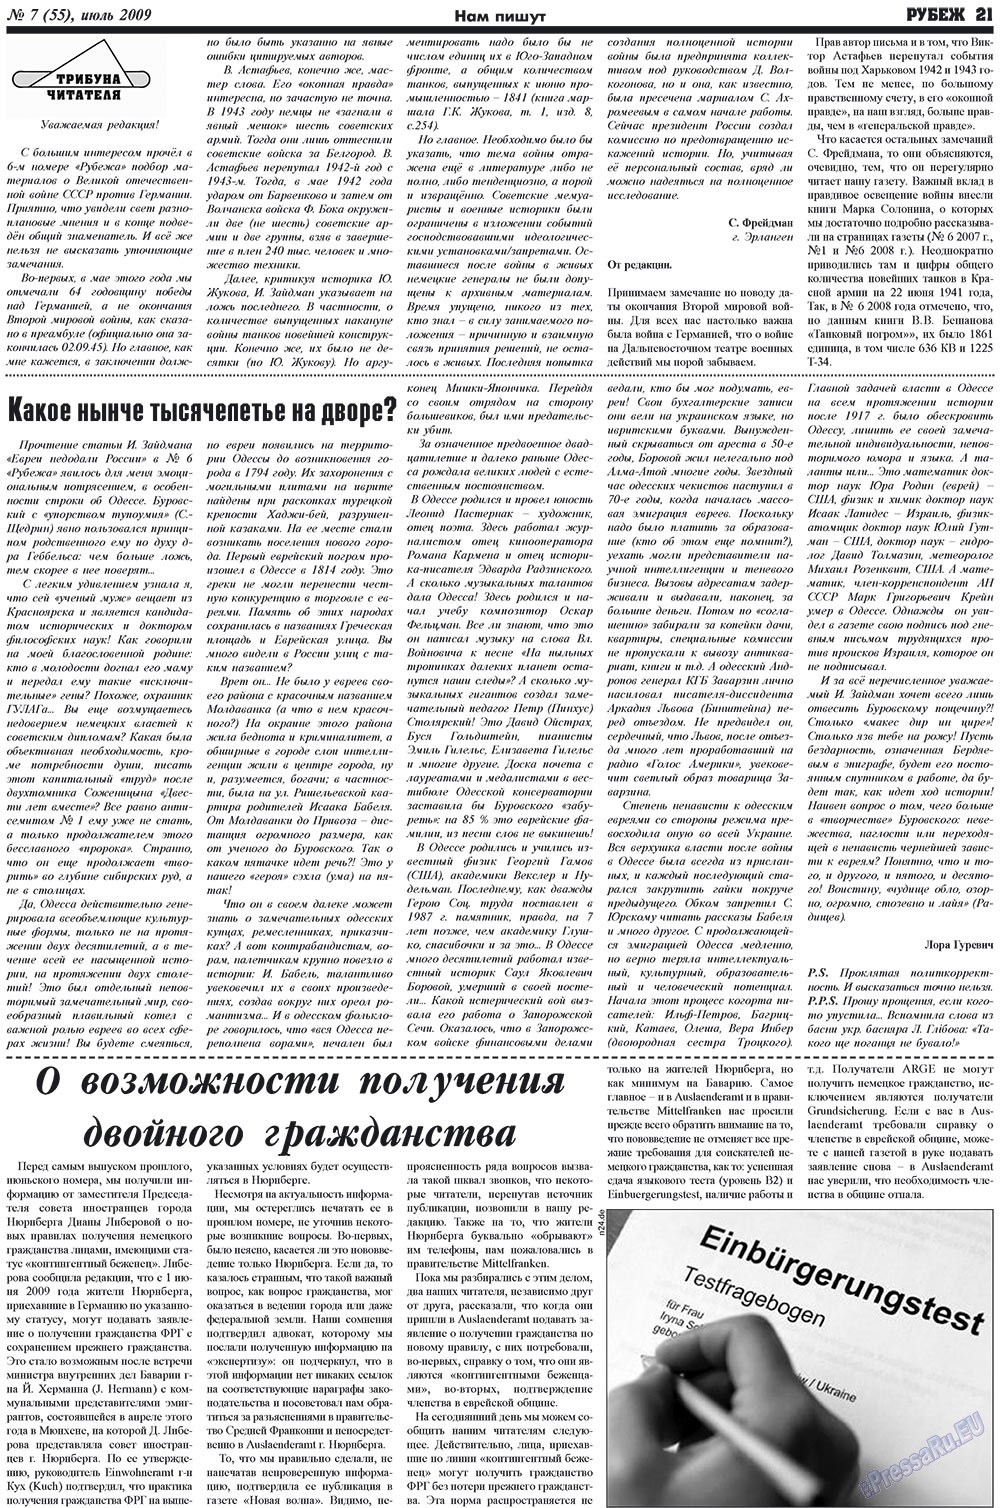 Рубеж, газета. 2009 №7 стр.21